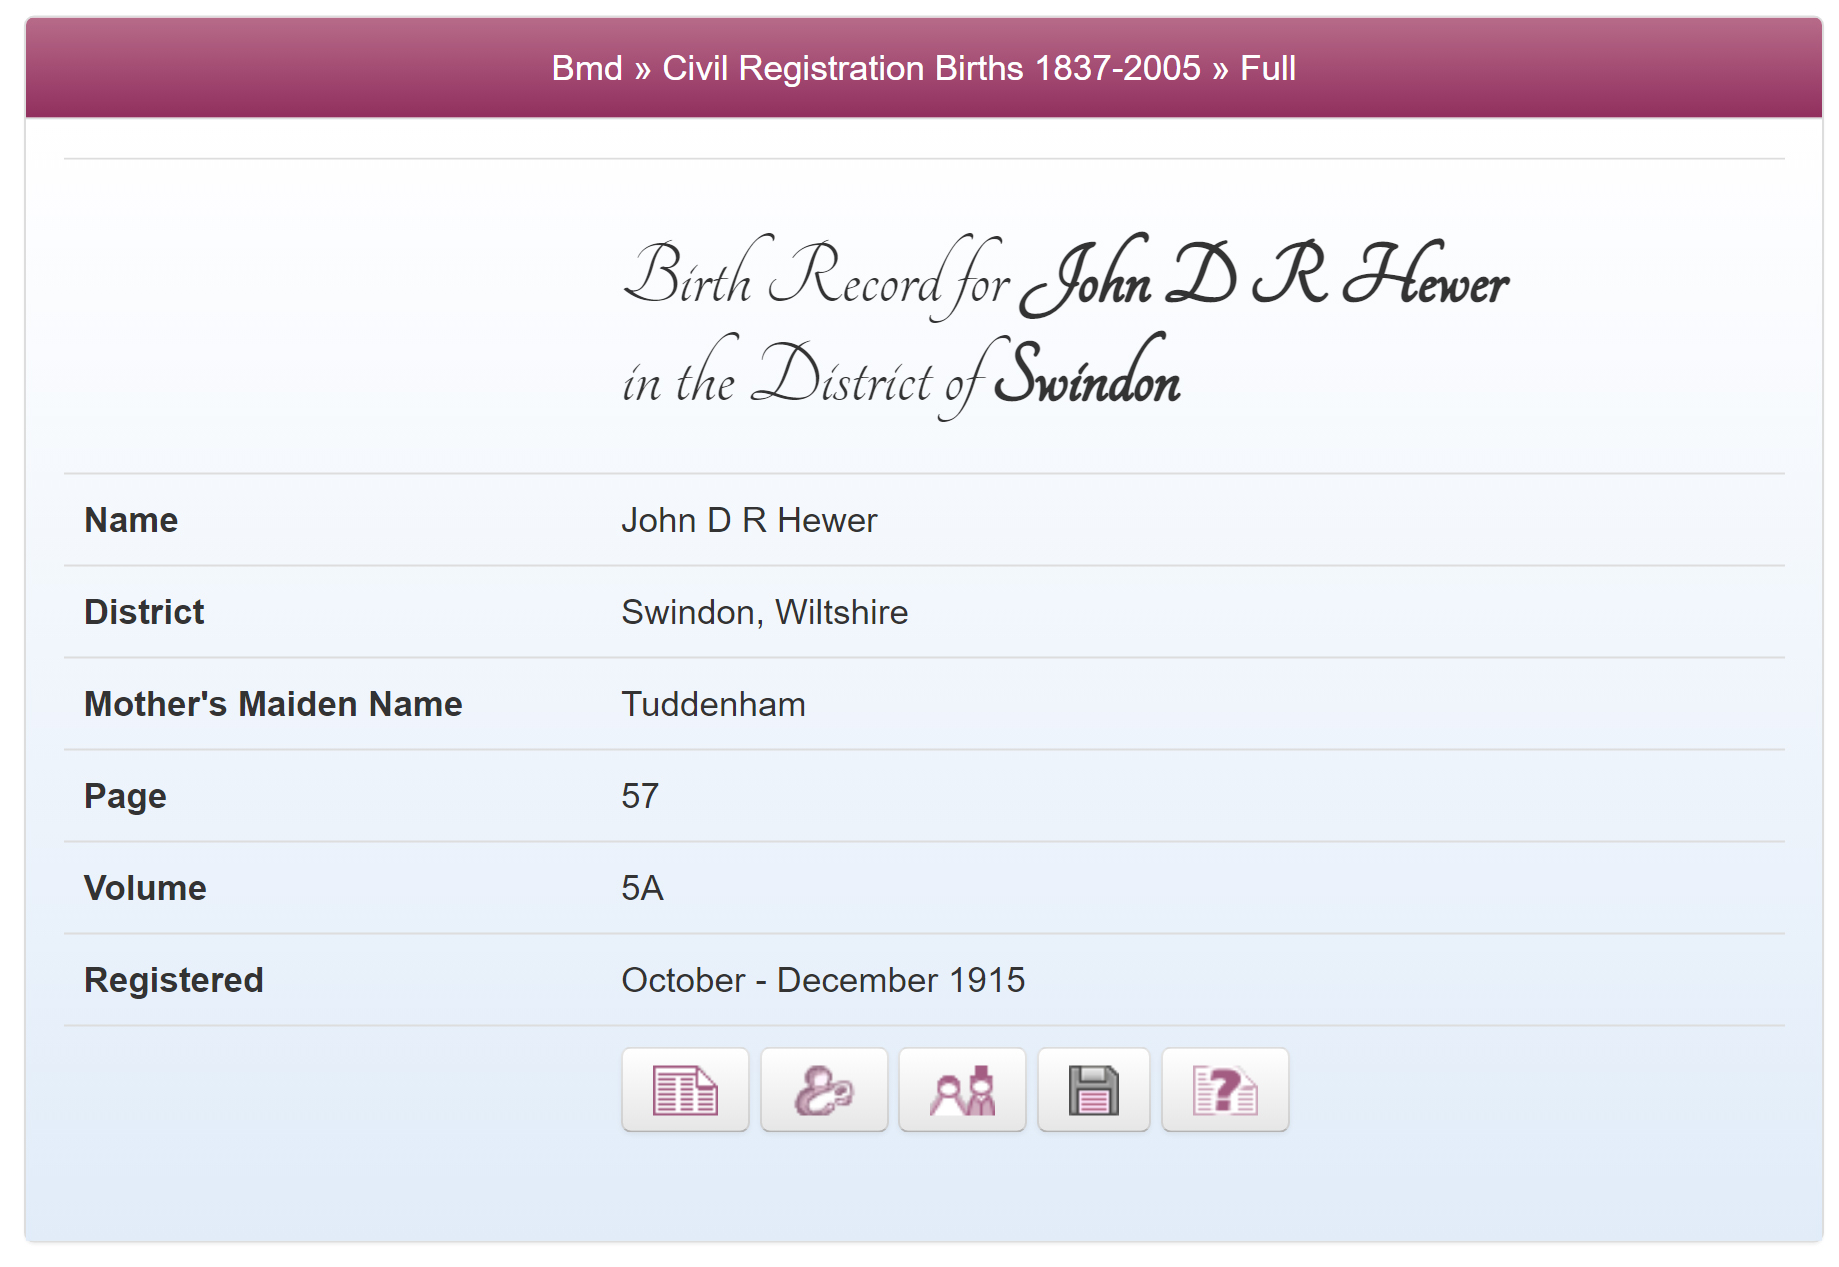 John Hewer's Birth Record